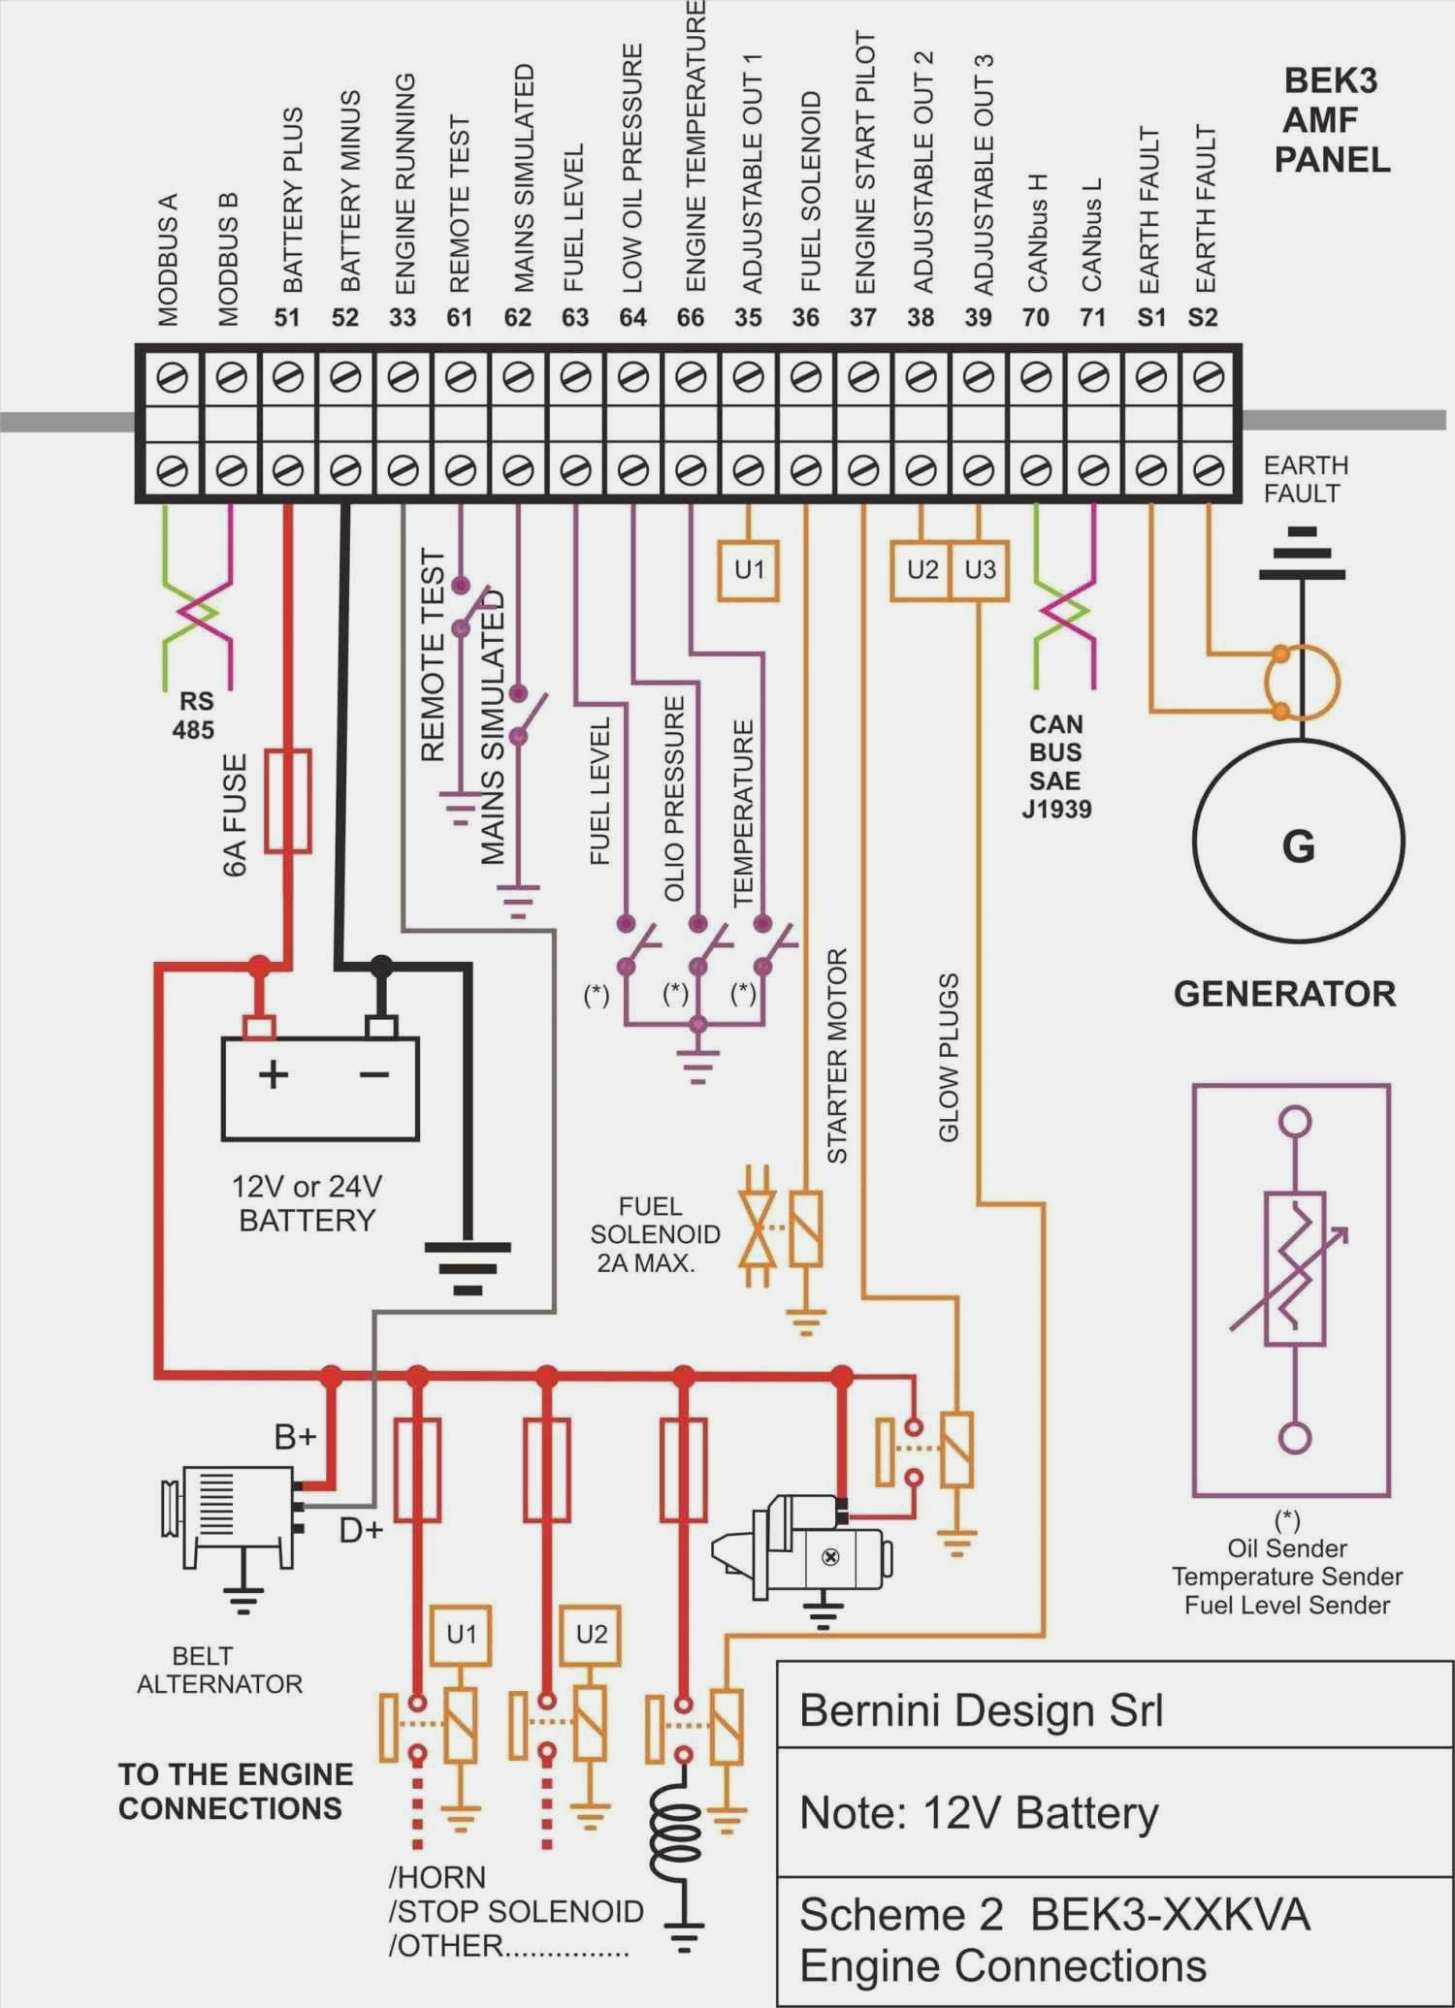 Heat Pump Thermostat Wiring Diagram Trane Heat Pump Thermostat Wiring Diagram Of Schema Wiring Diagrams